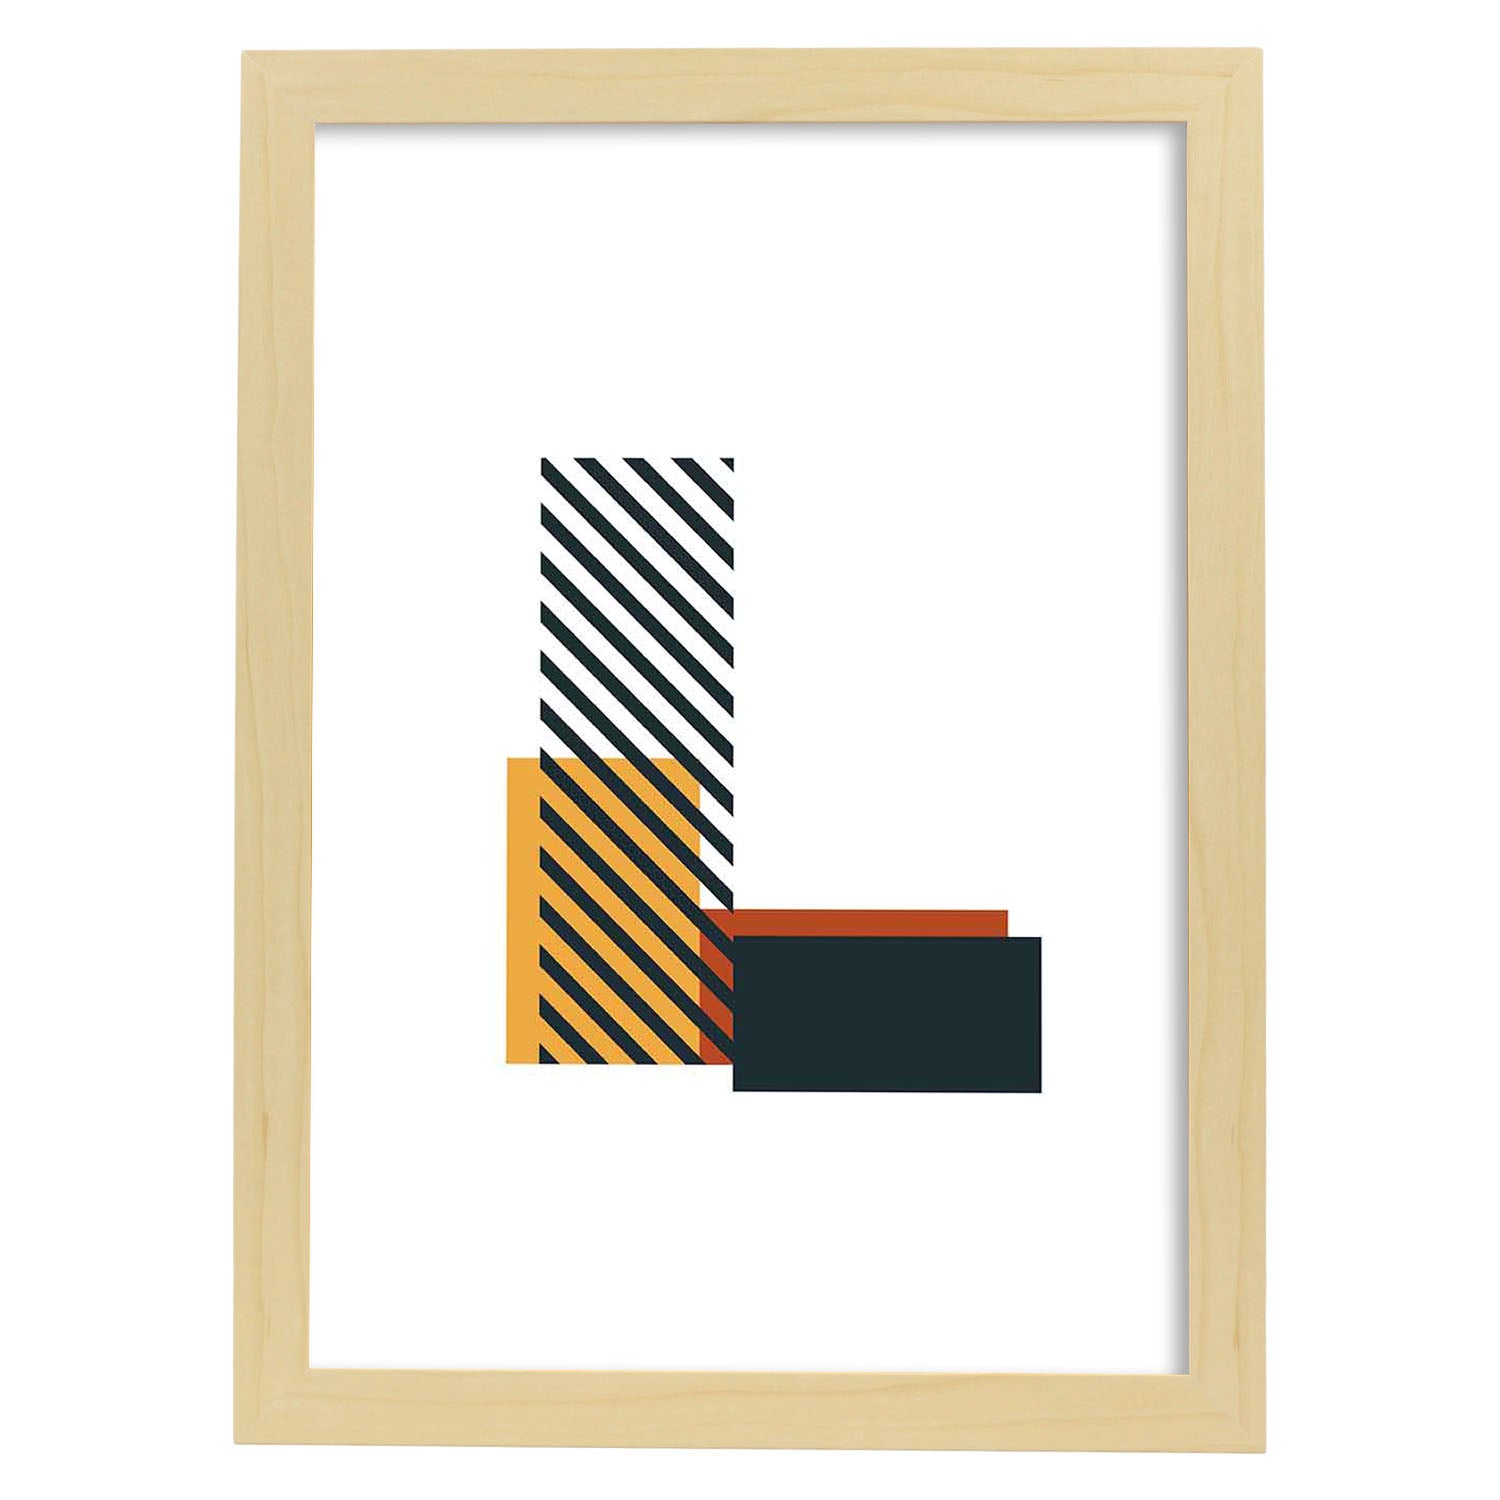 Poster de letra L. Lámina estilo Geometria con imágenes del alfabeto.-Artwork-Nacnic-A3-Marco Madera clara-Nacnic Estudio SL